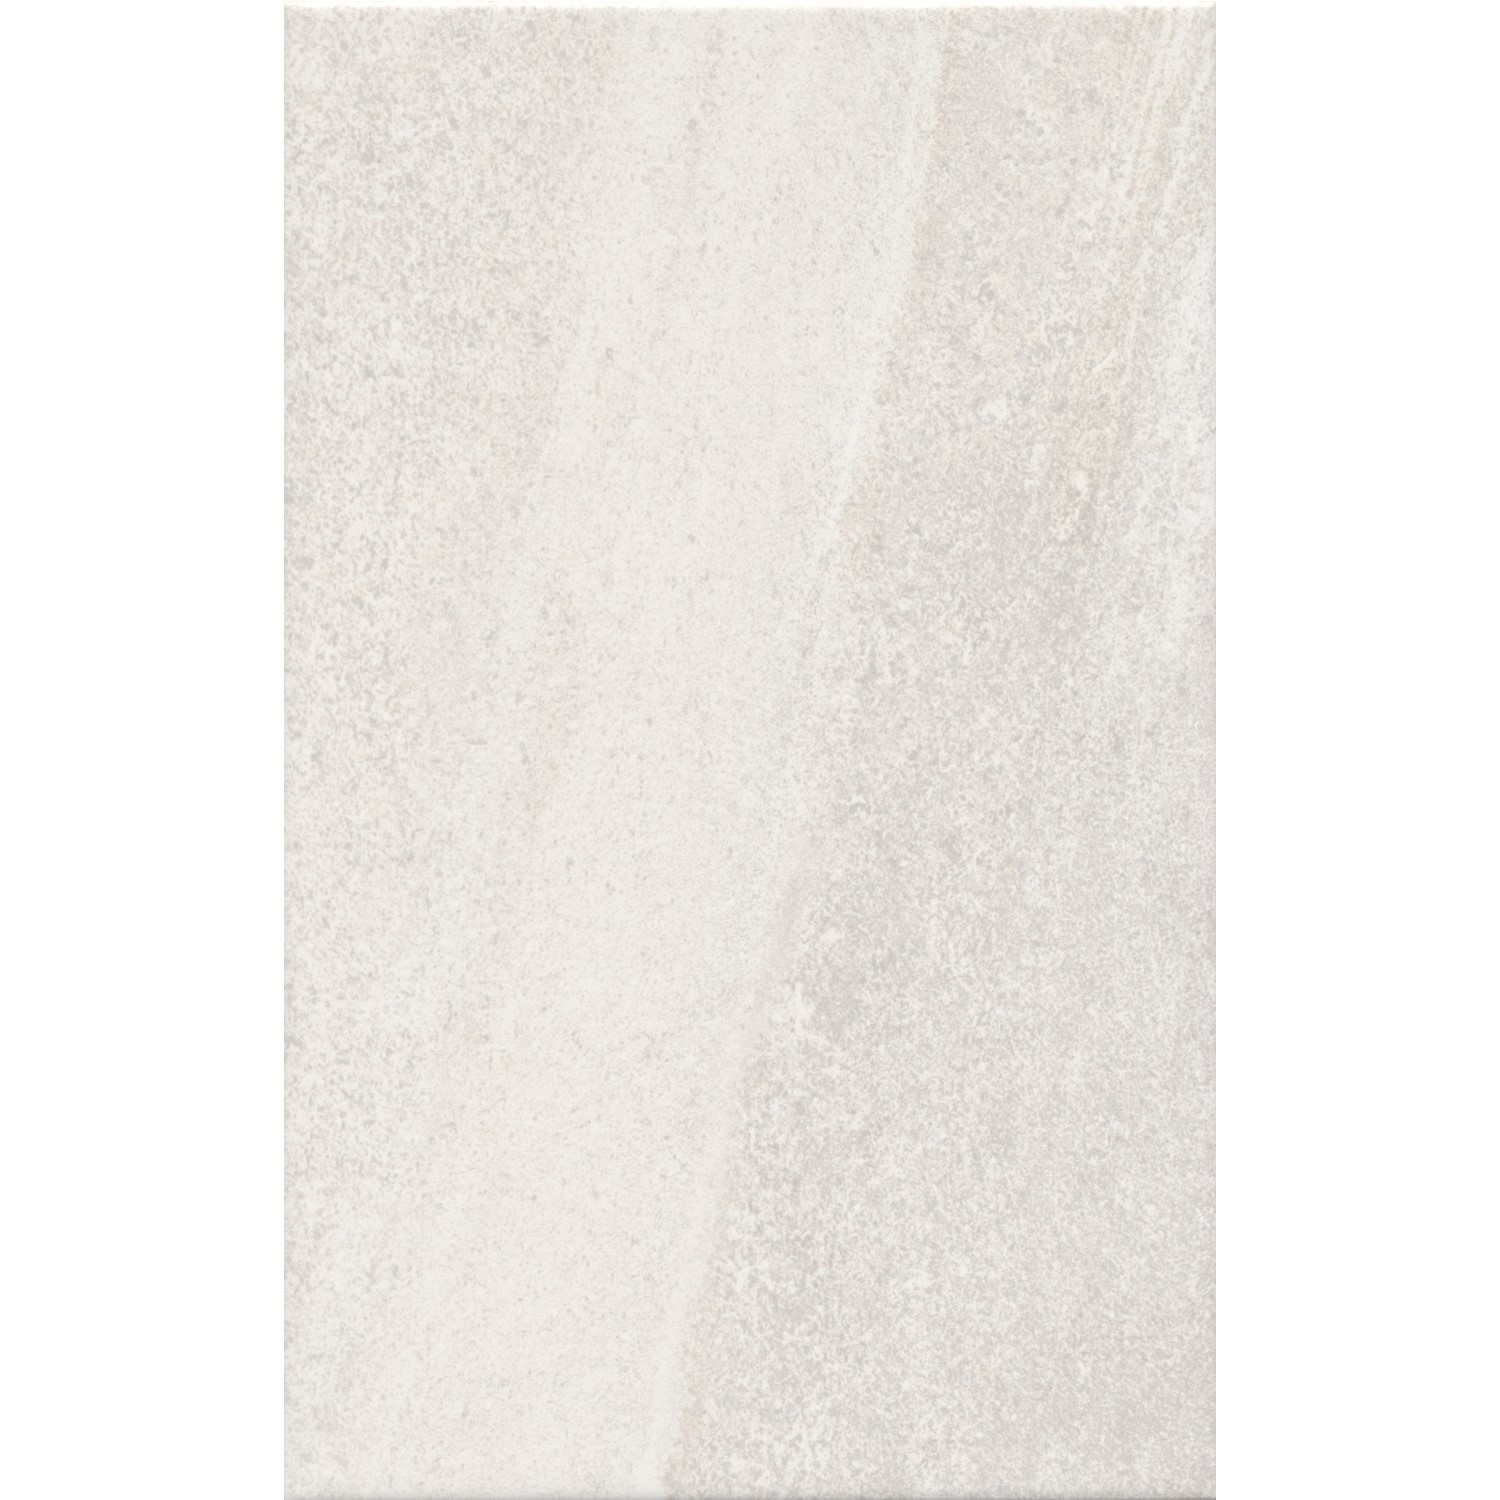 White Stone Effect Wall Tile 25 x 40cm - Zento